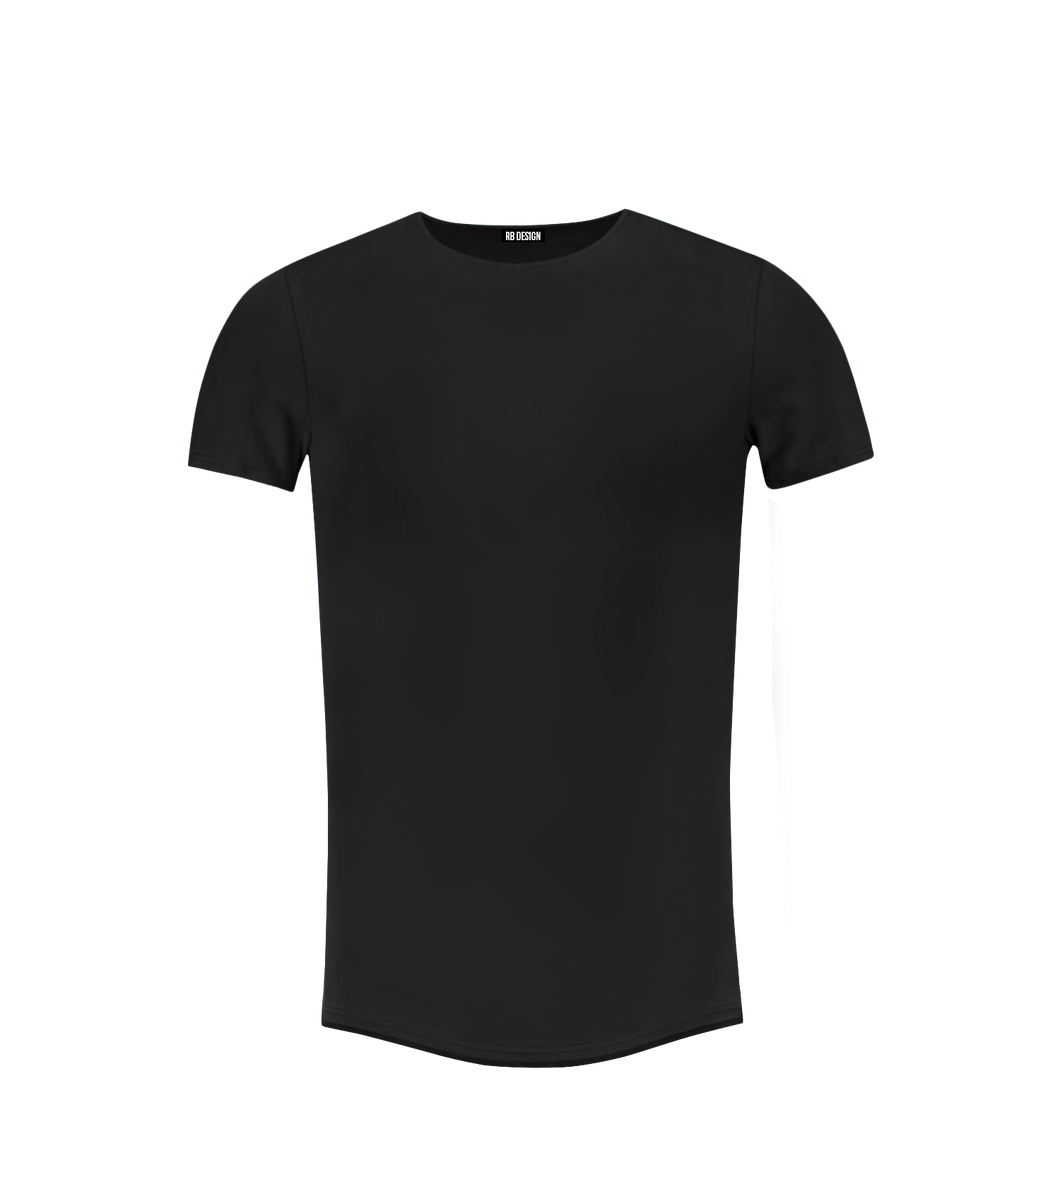 Download Men's Plain Black Round Neck T-shirt - Longline Tee - RB ...